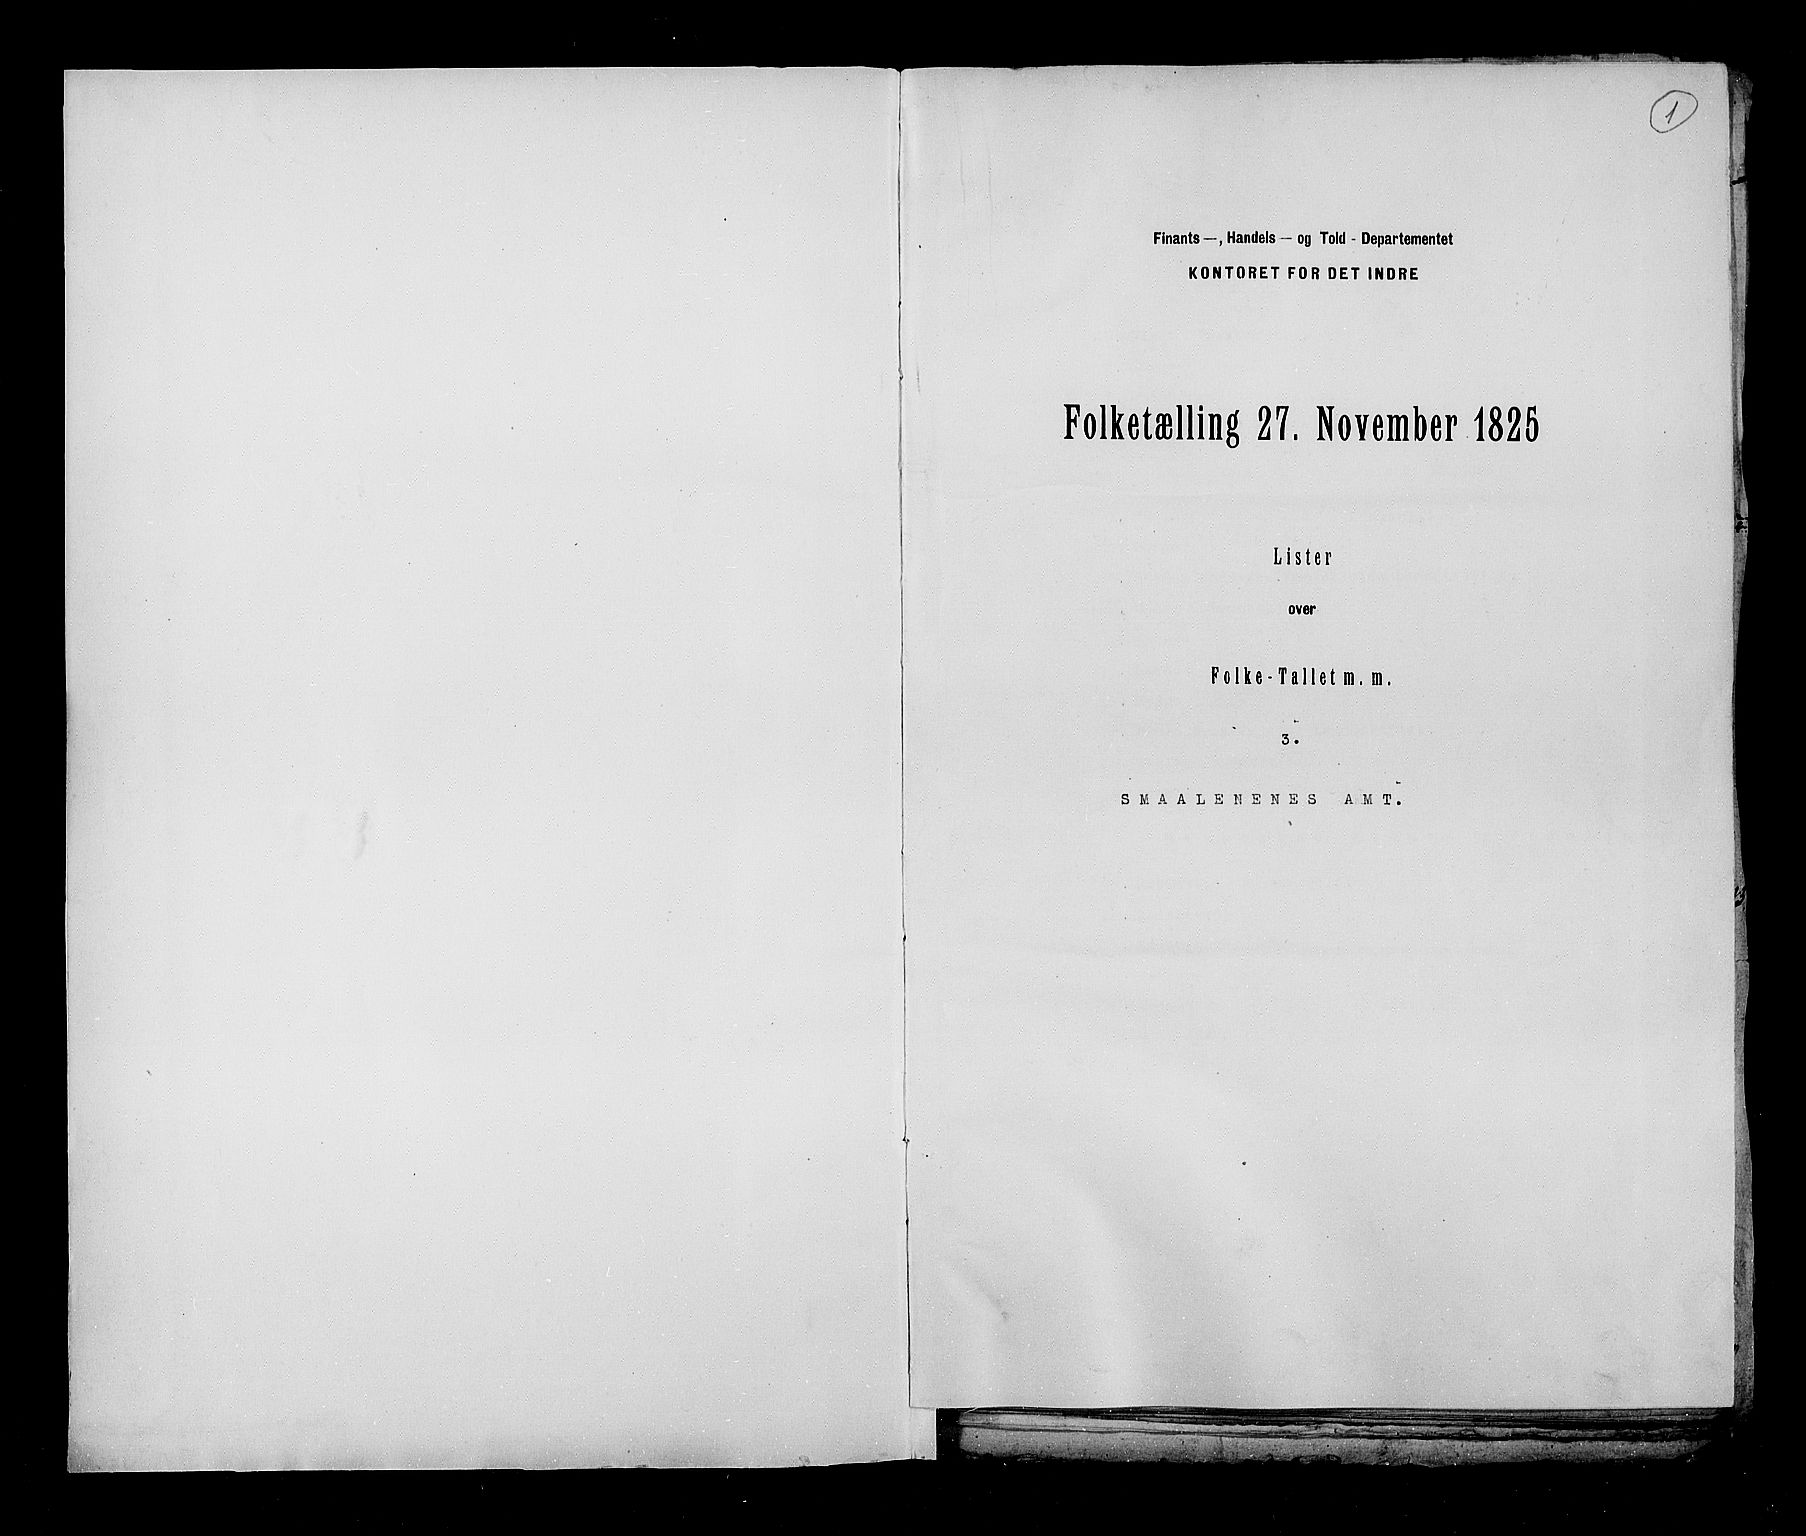 RA, Census 1825, vol. 3: Smålenenes amt, 1825, p. 1